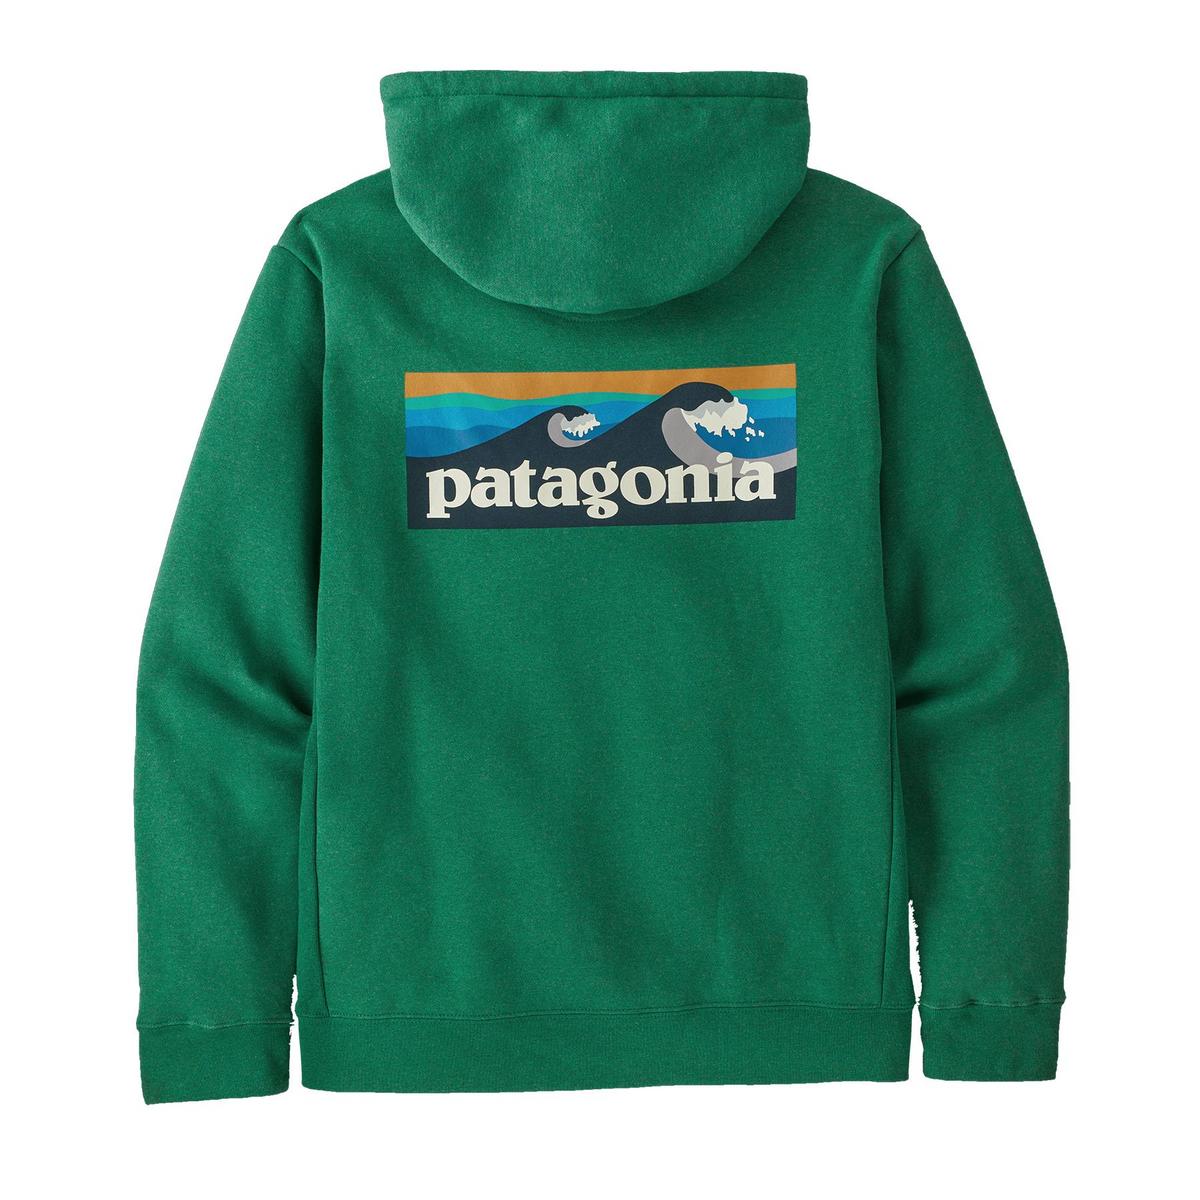 Patagonia Men's Boardshort Uprisal Hoody - Green